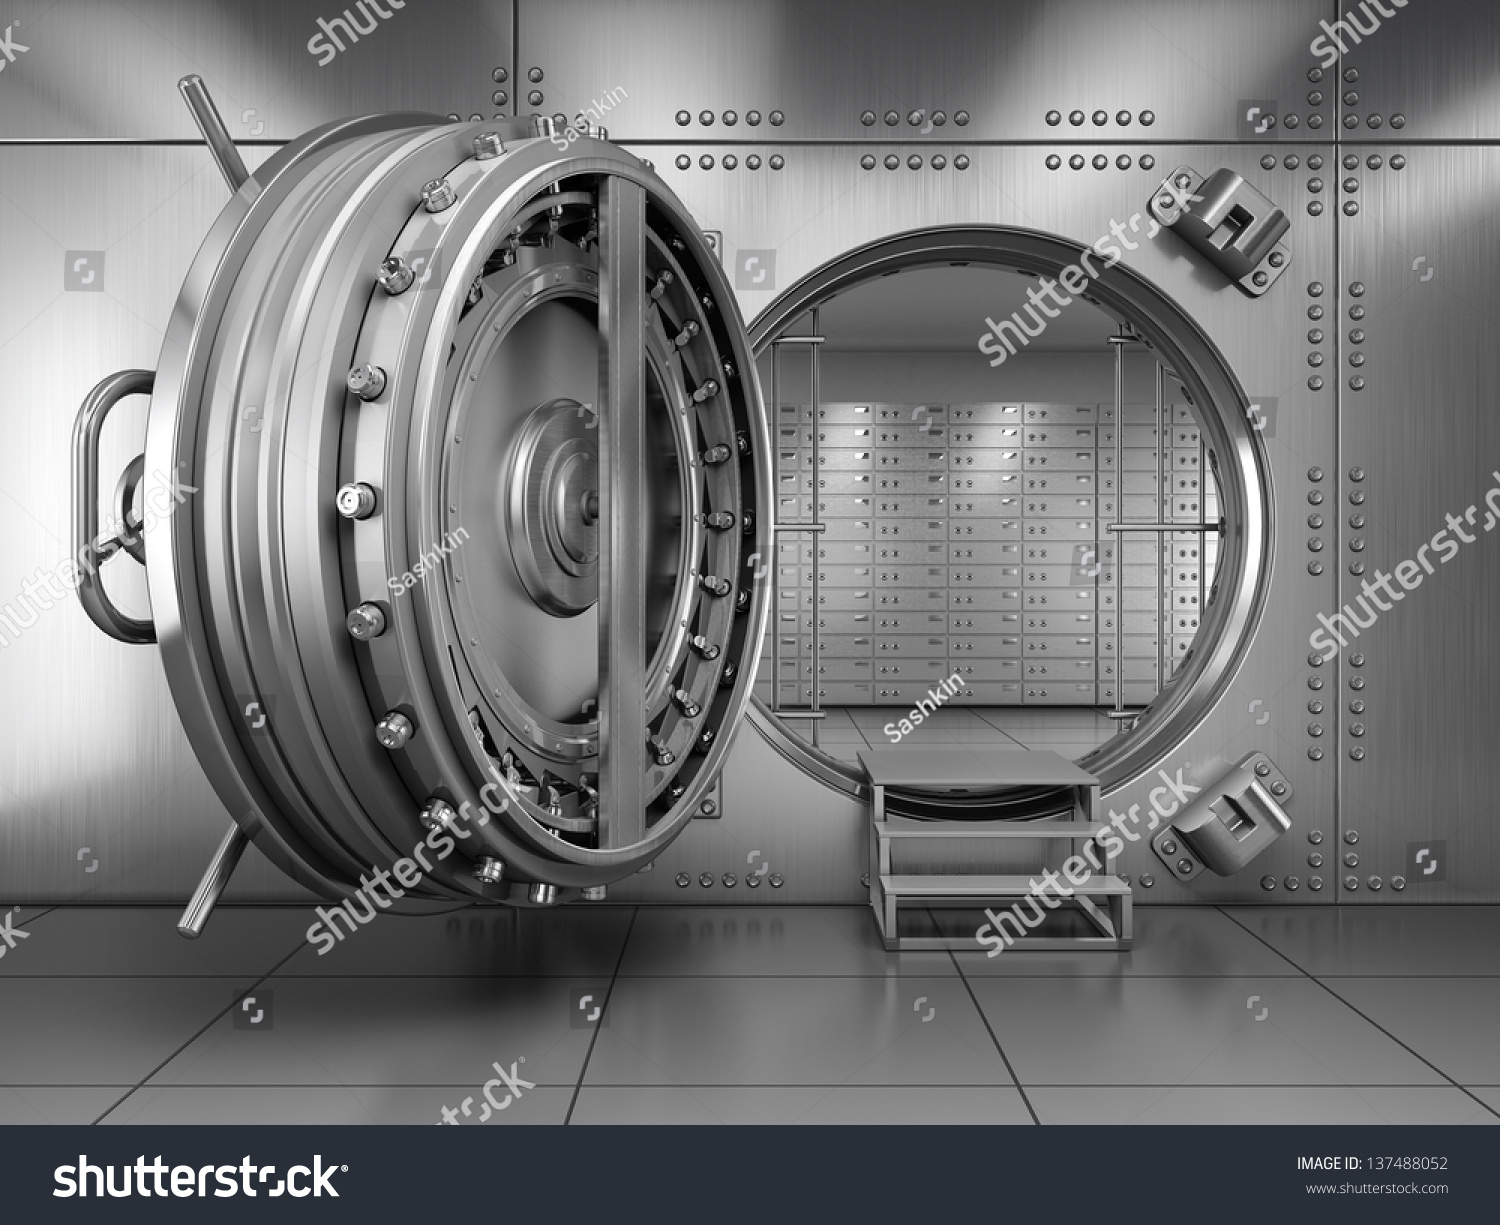 bank vault clipart - photo #17